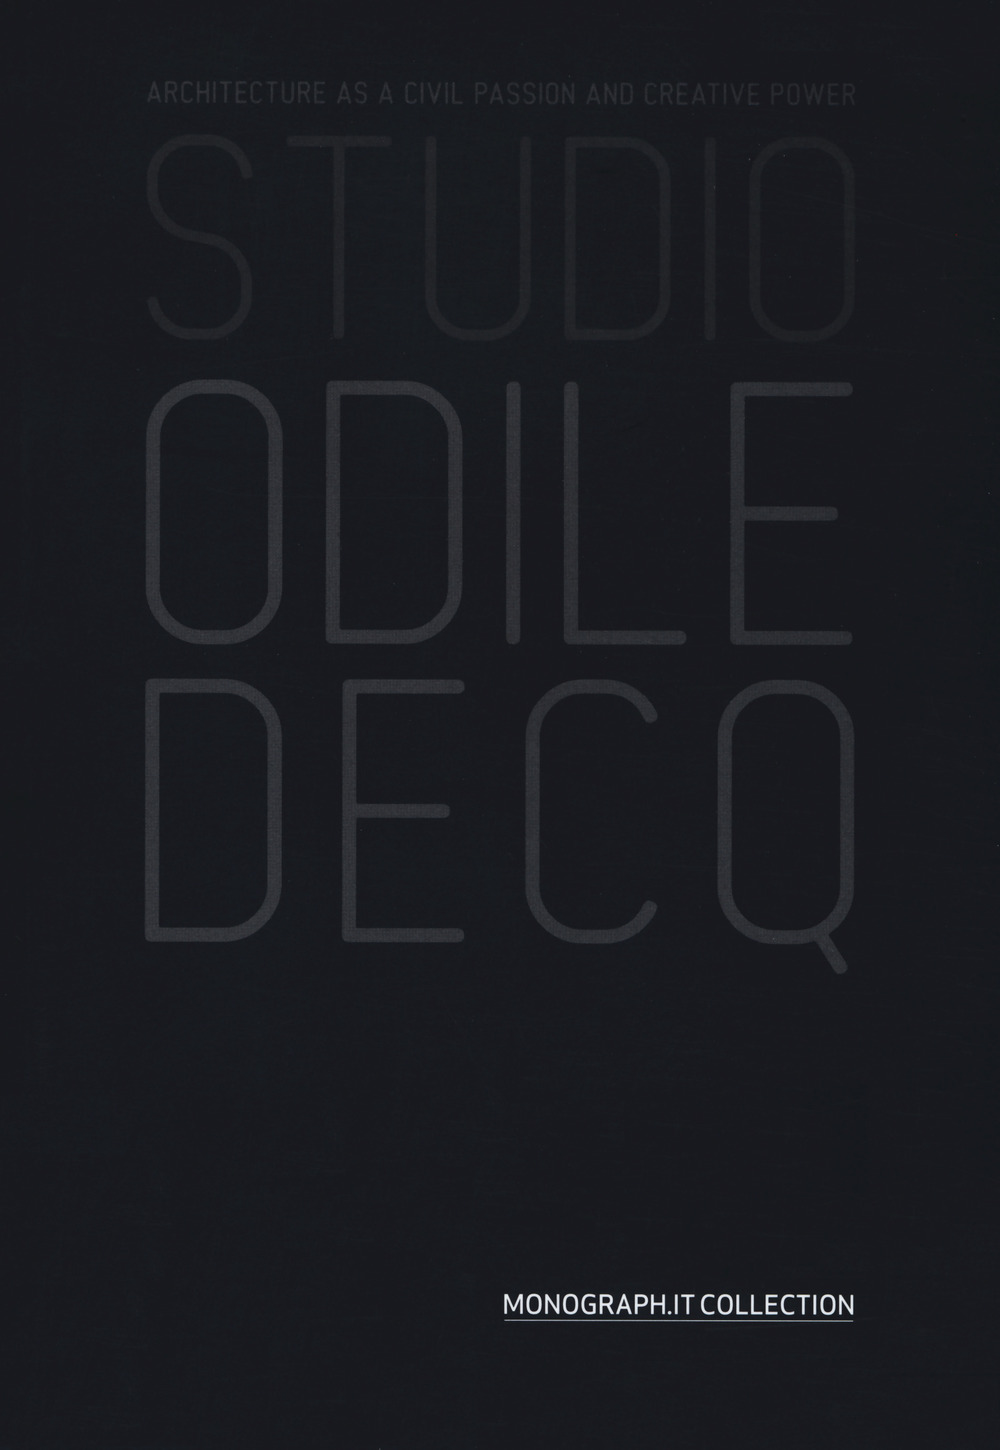 Studio Odile Decq. Ediz. illustrata